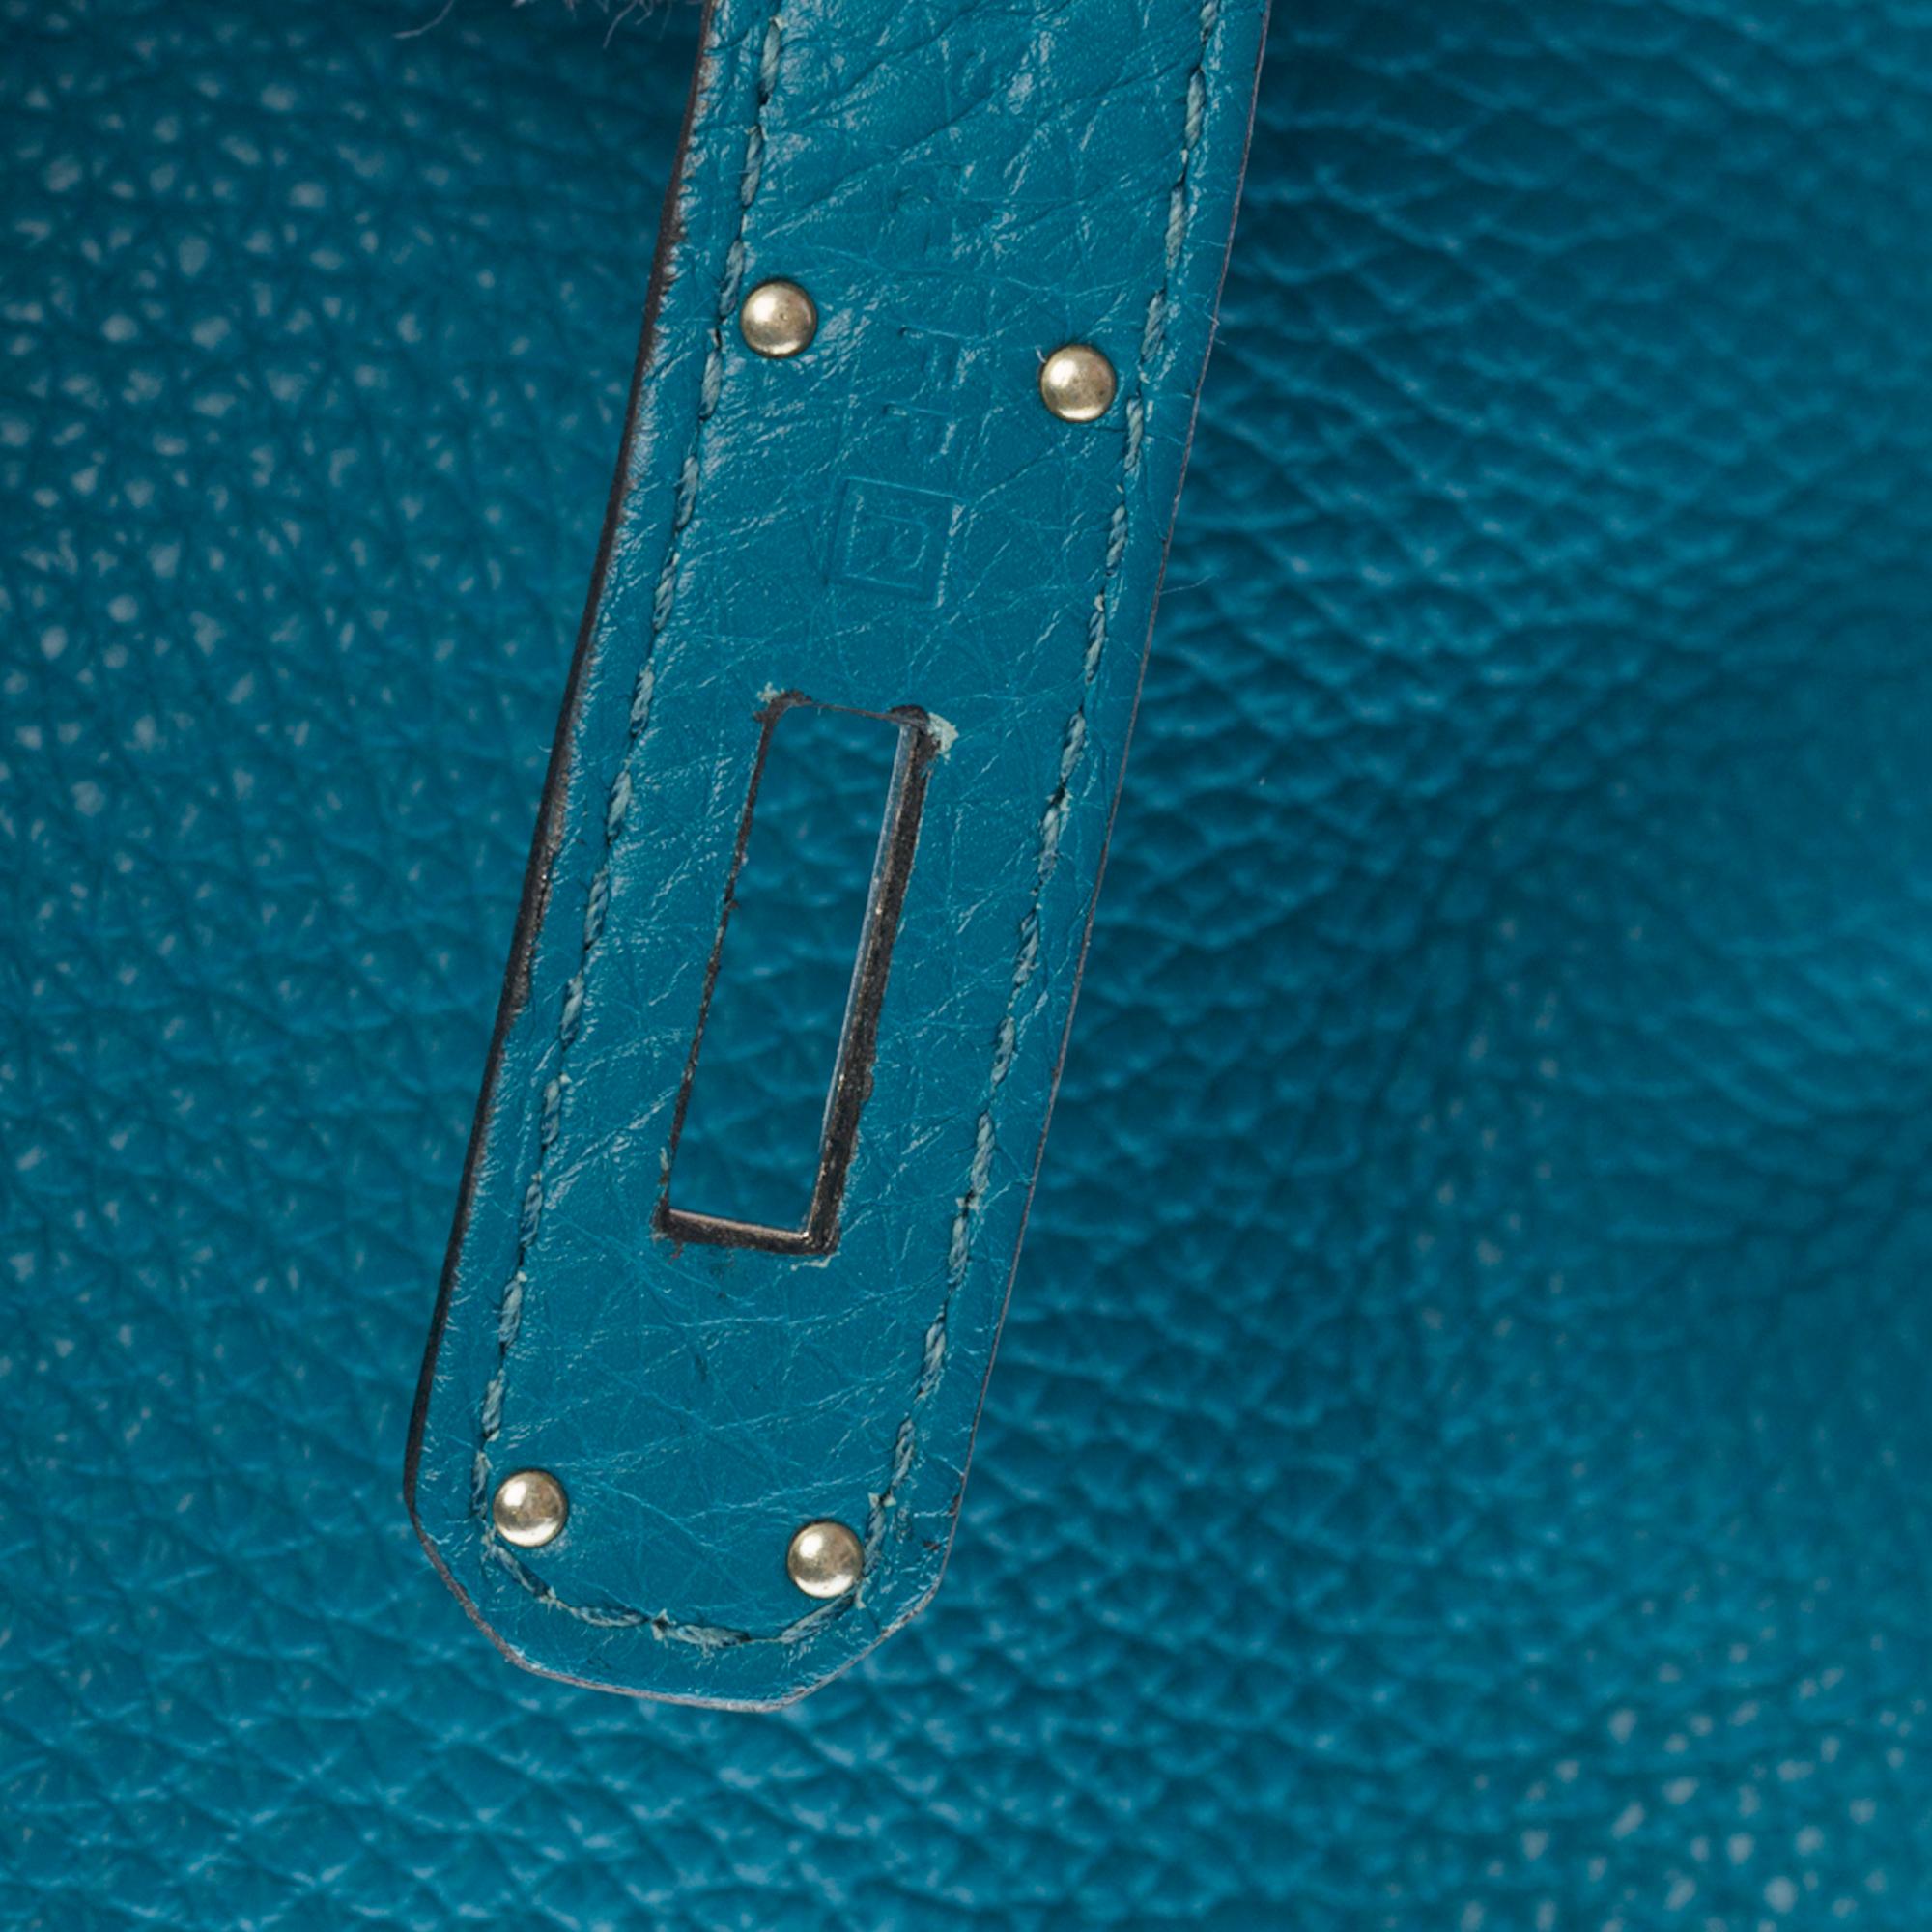 Women's or Men's Stunning Hermes Birkin 40cm handbag in Blue Pétrole Togo leather, SHW